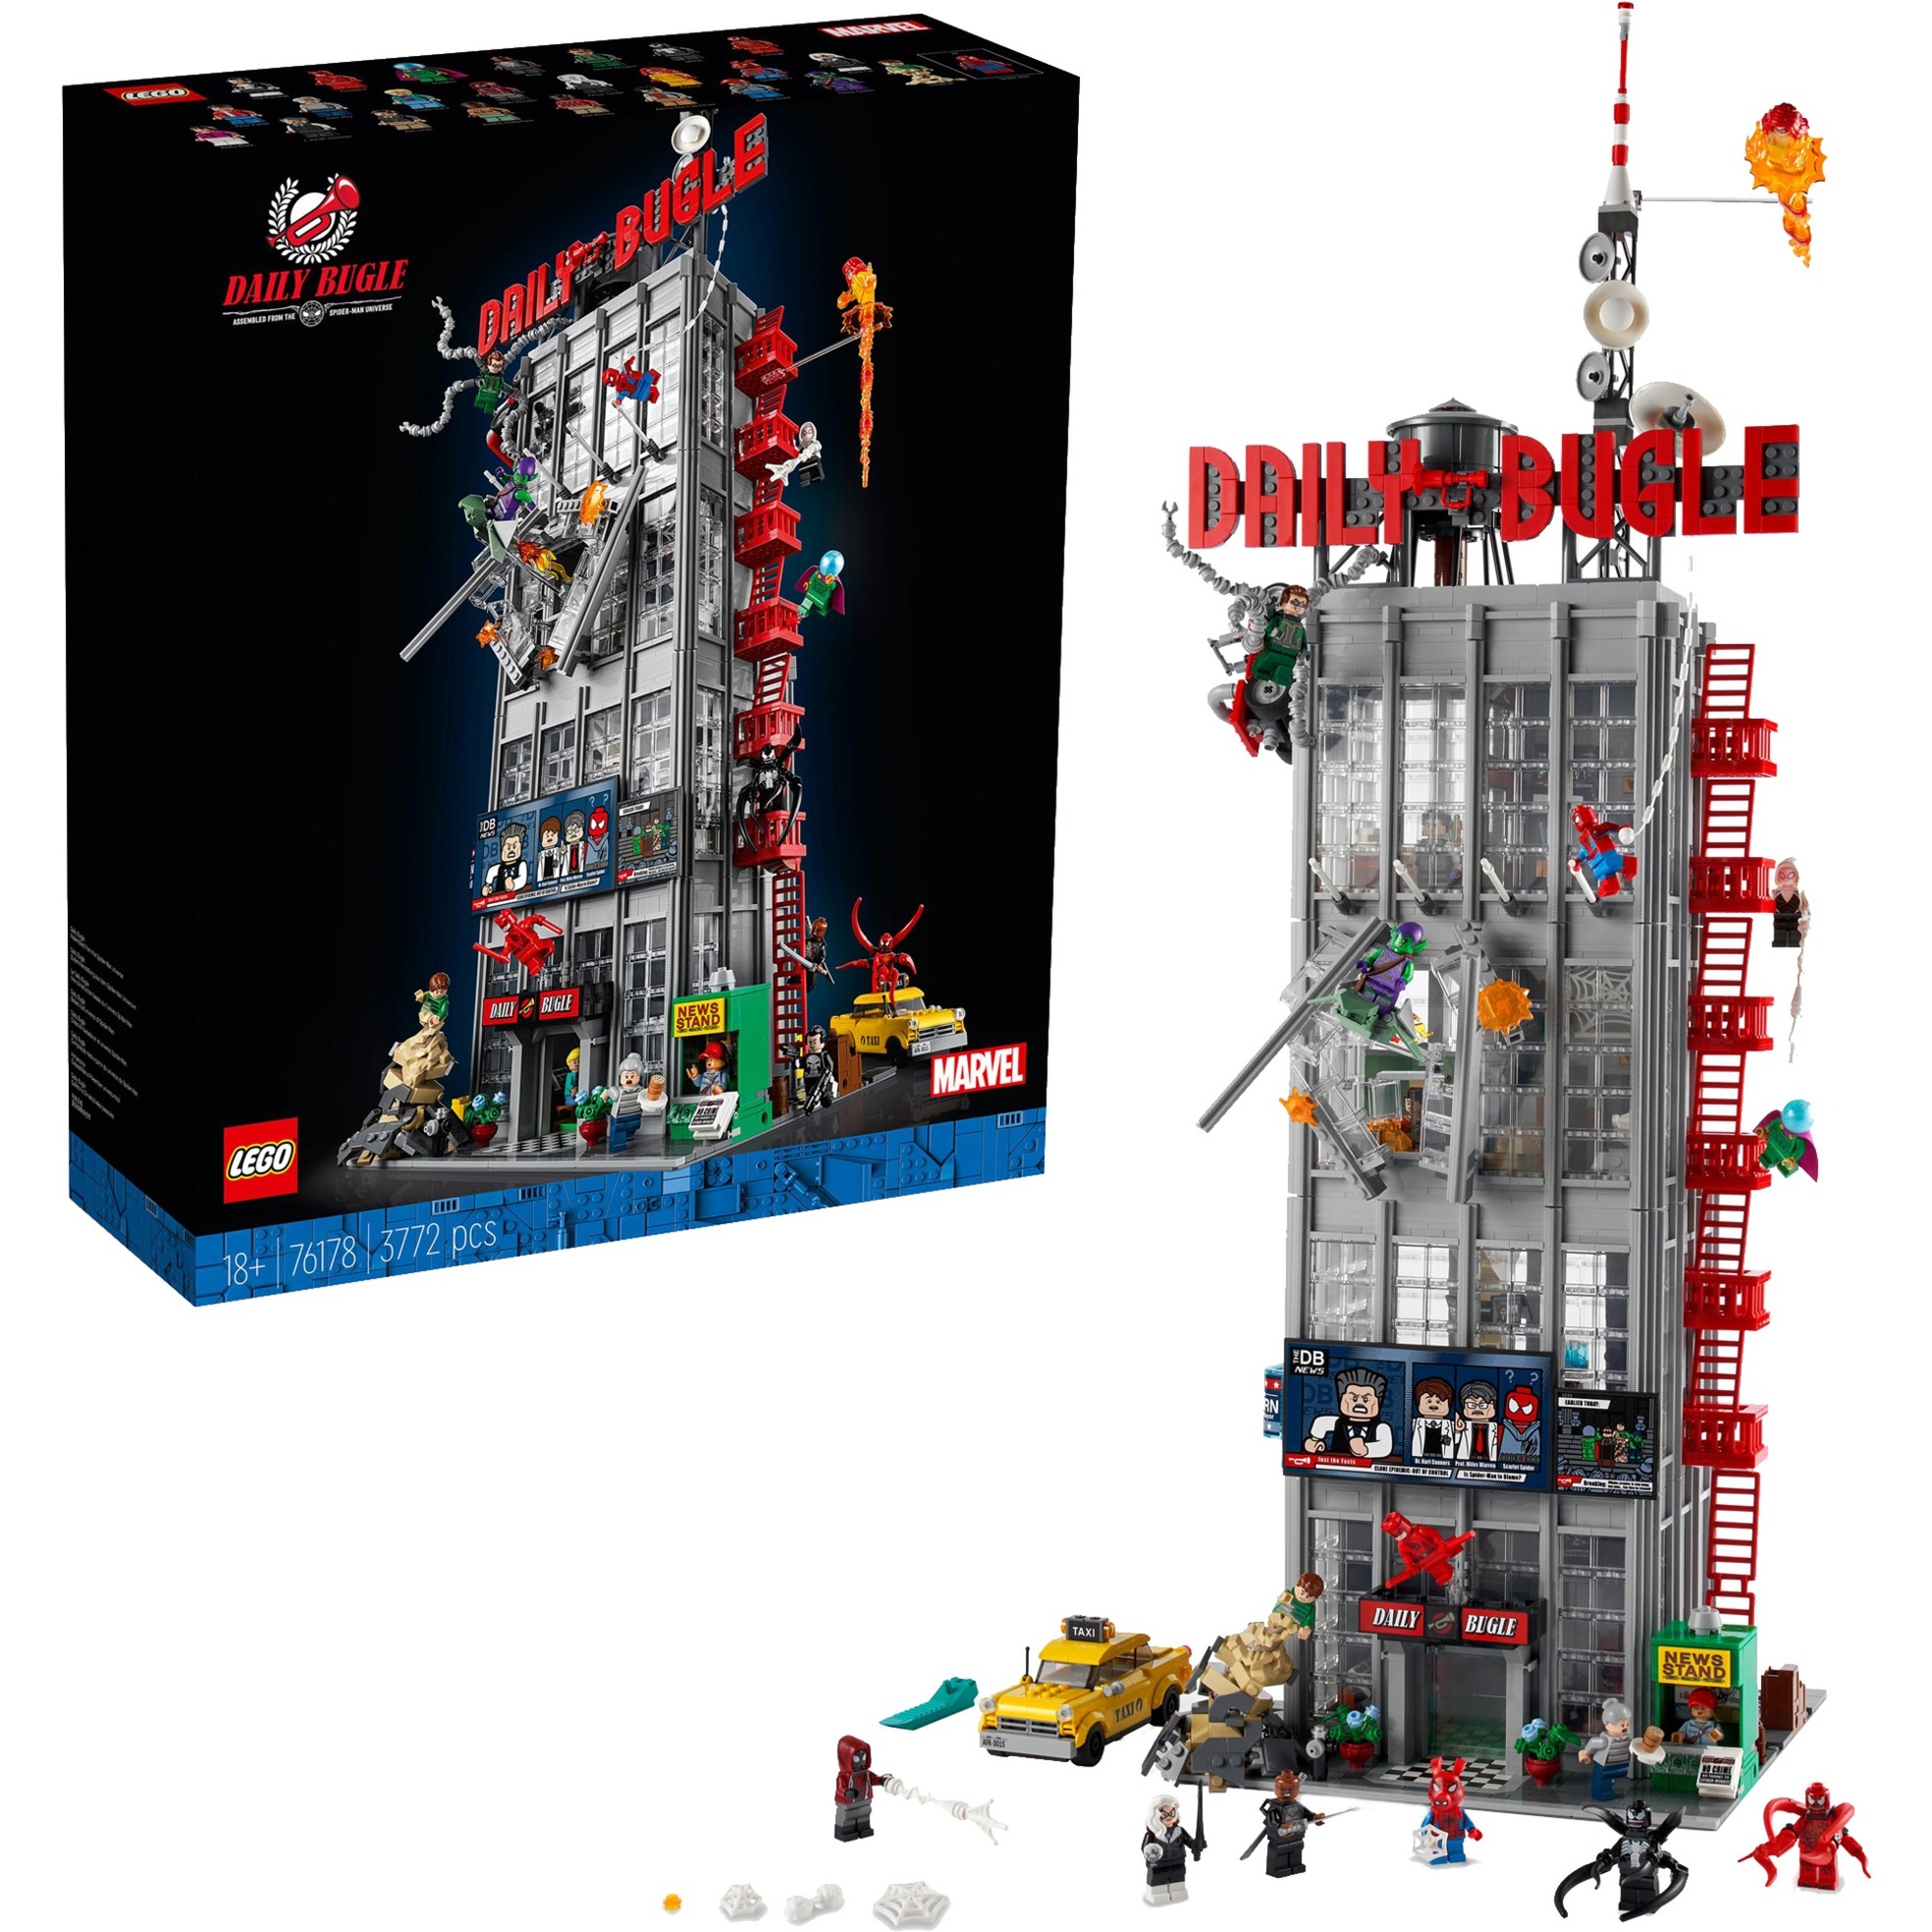 Spielzeug: Lego 76178 Marvel Super Heroes Daily Bugle